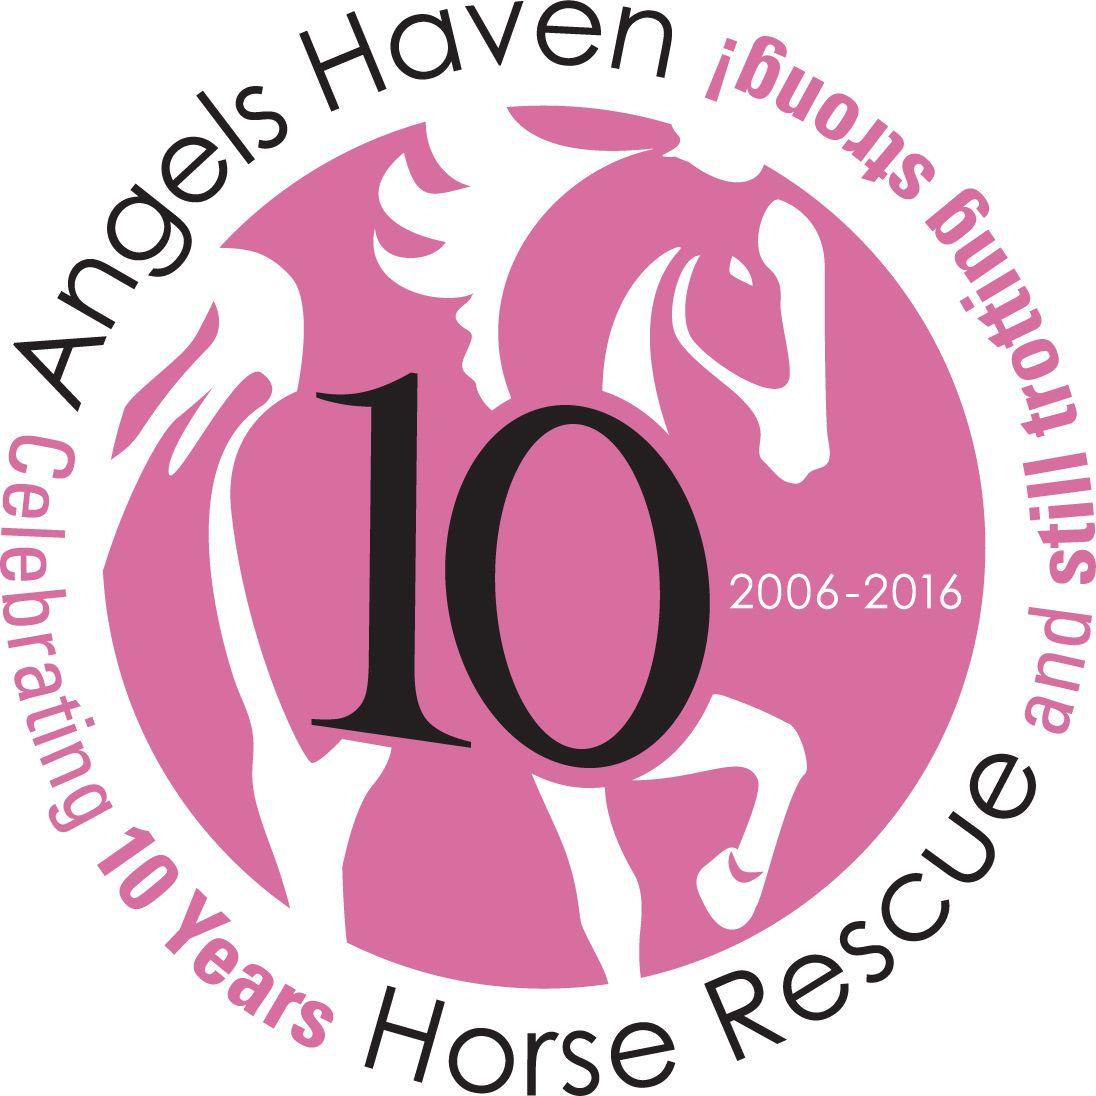 Horse Rescue Logo - Angels Haven Horse Rescue. Angels Haven Horse Rescue's mission is